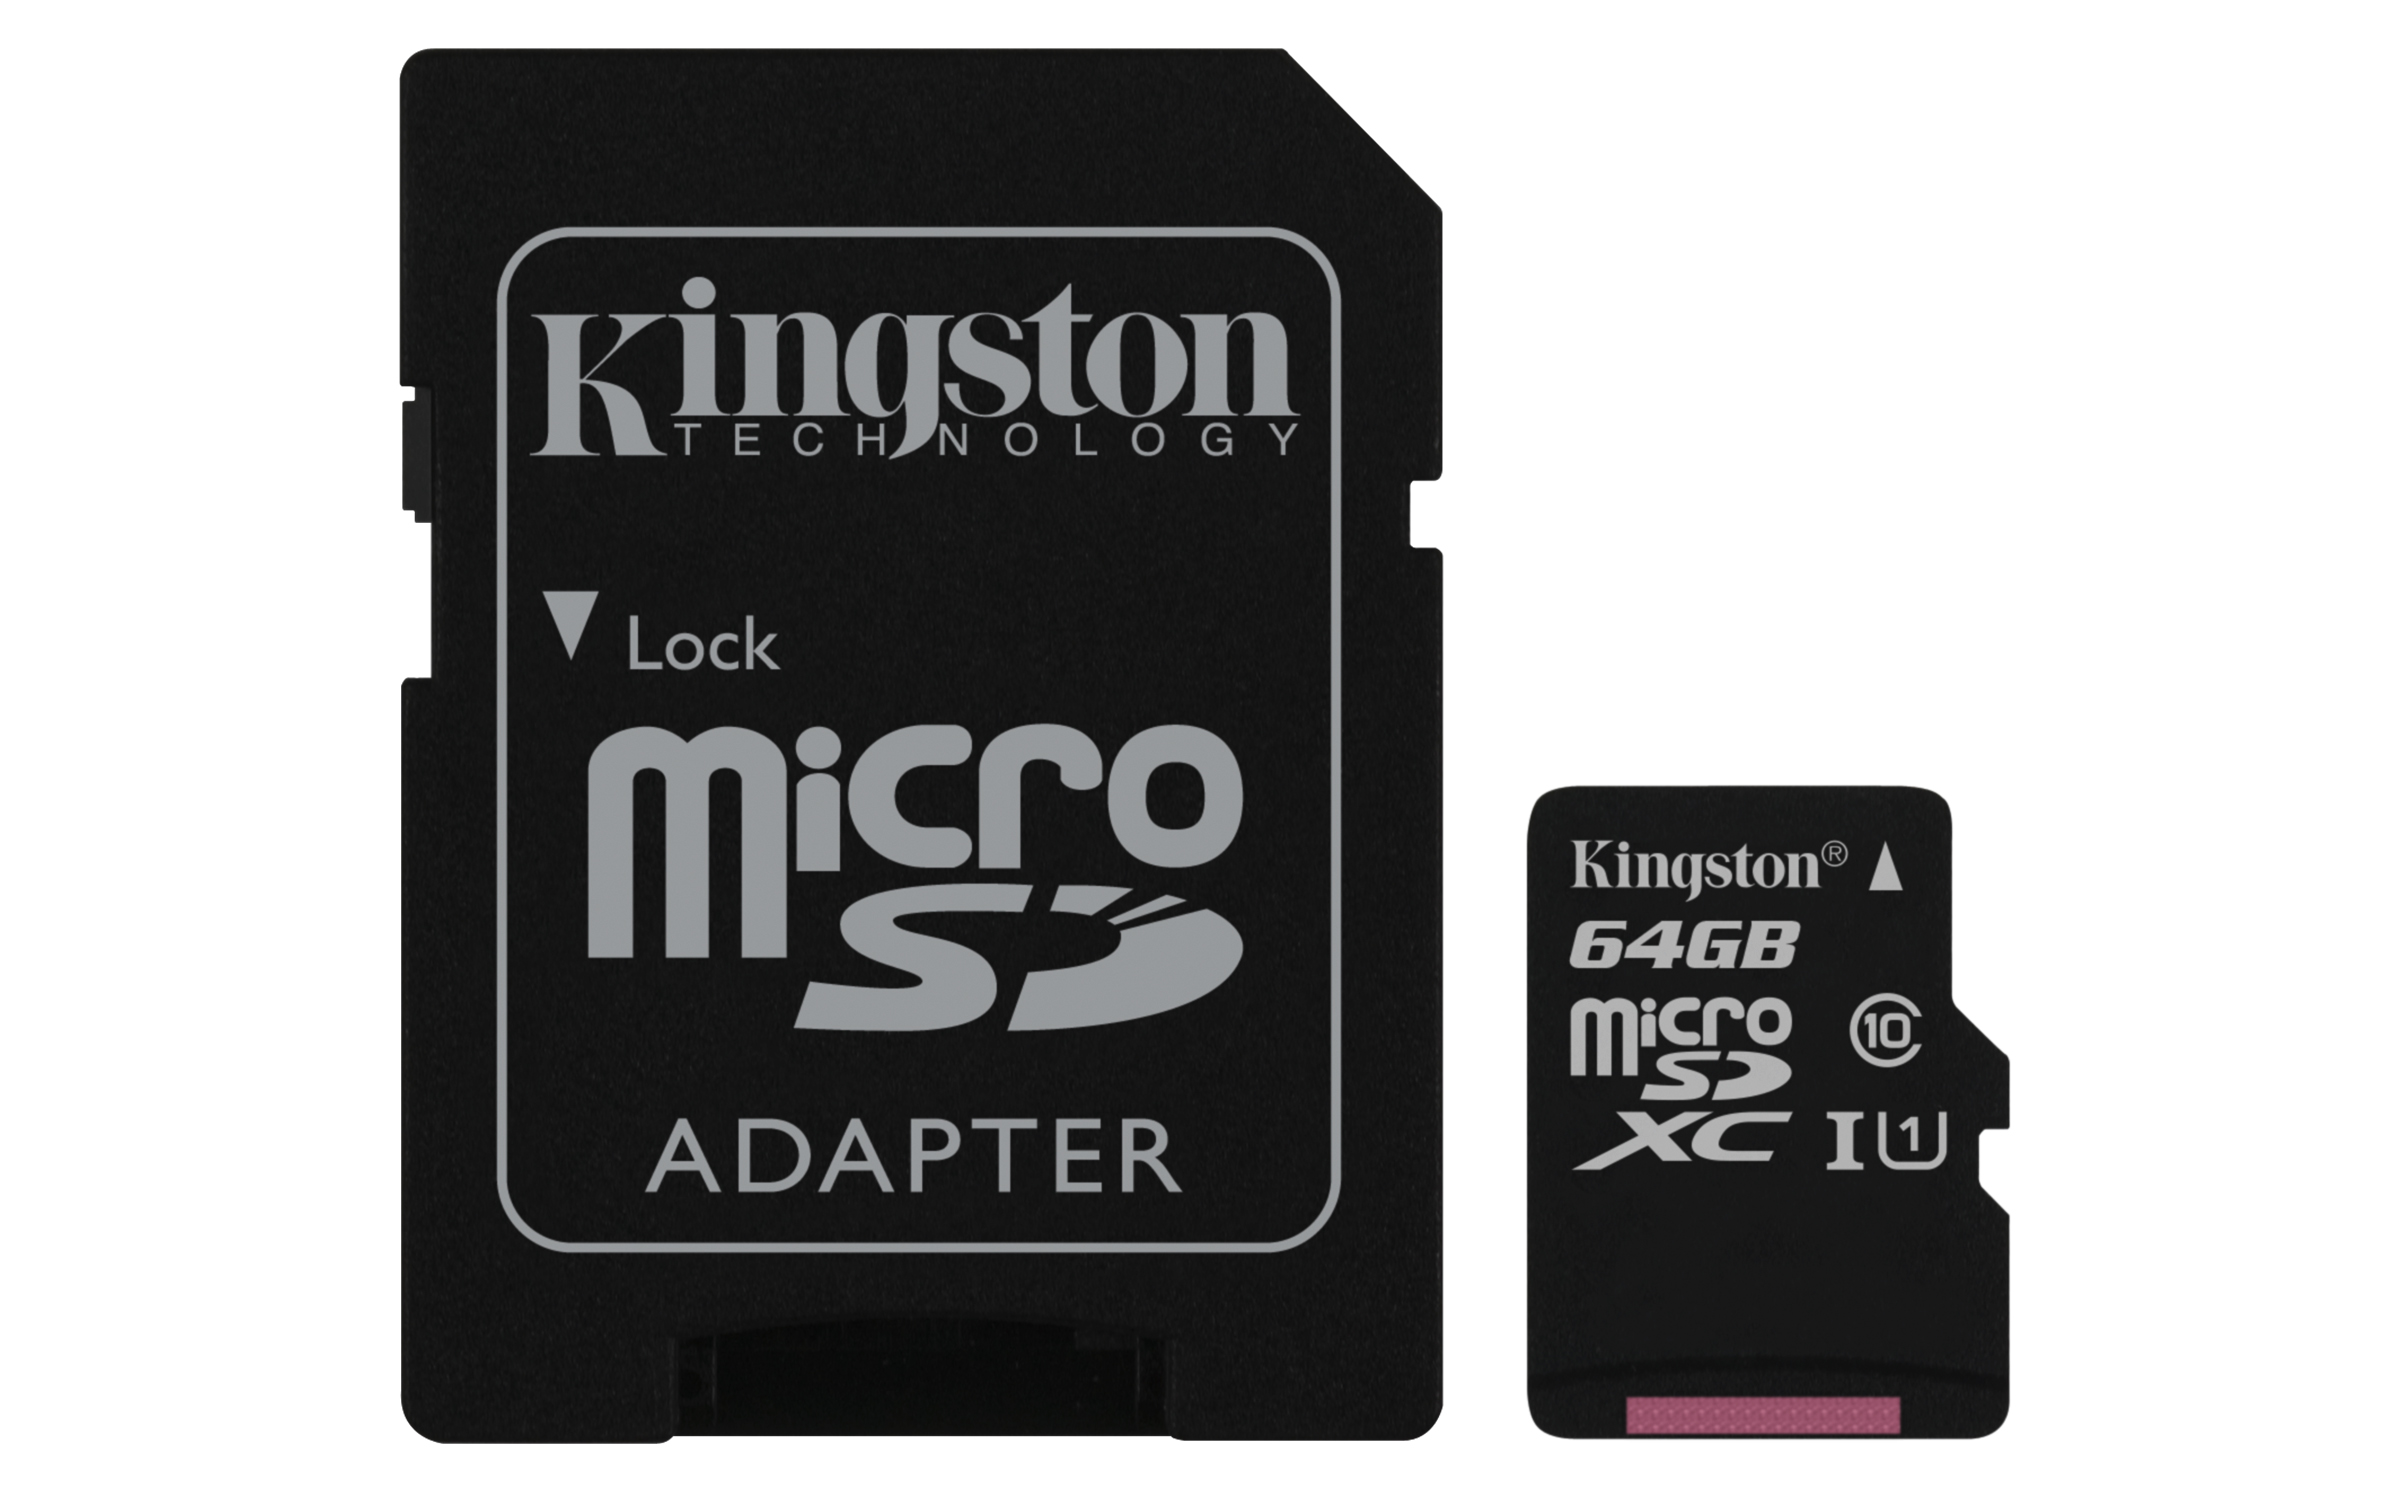 KINGSTON Micro SD карта памяти 64 ГБ класс 10 UHS емкость карты 64 ГБ